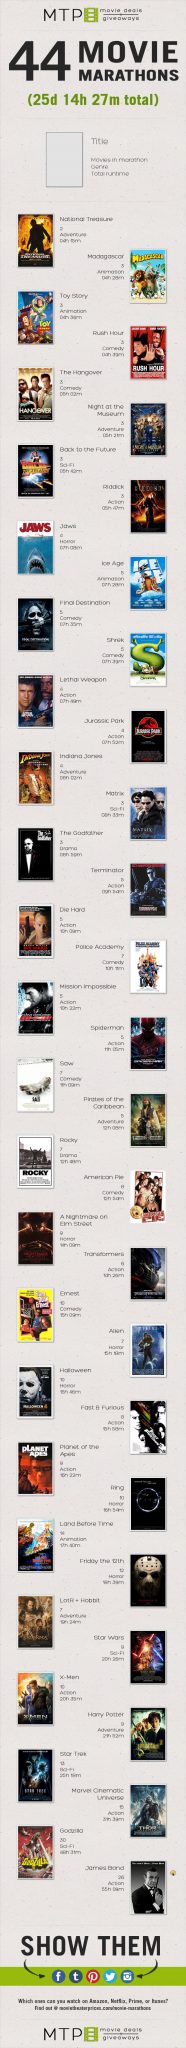 Movie Marathons Infographic